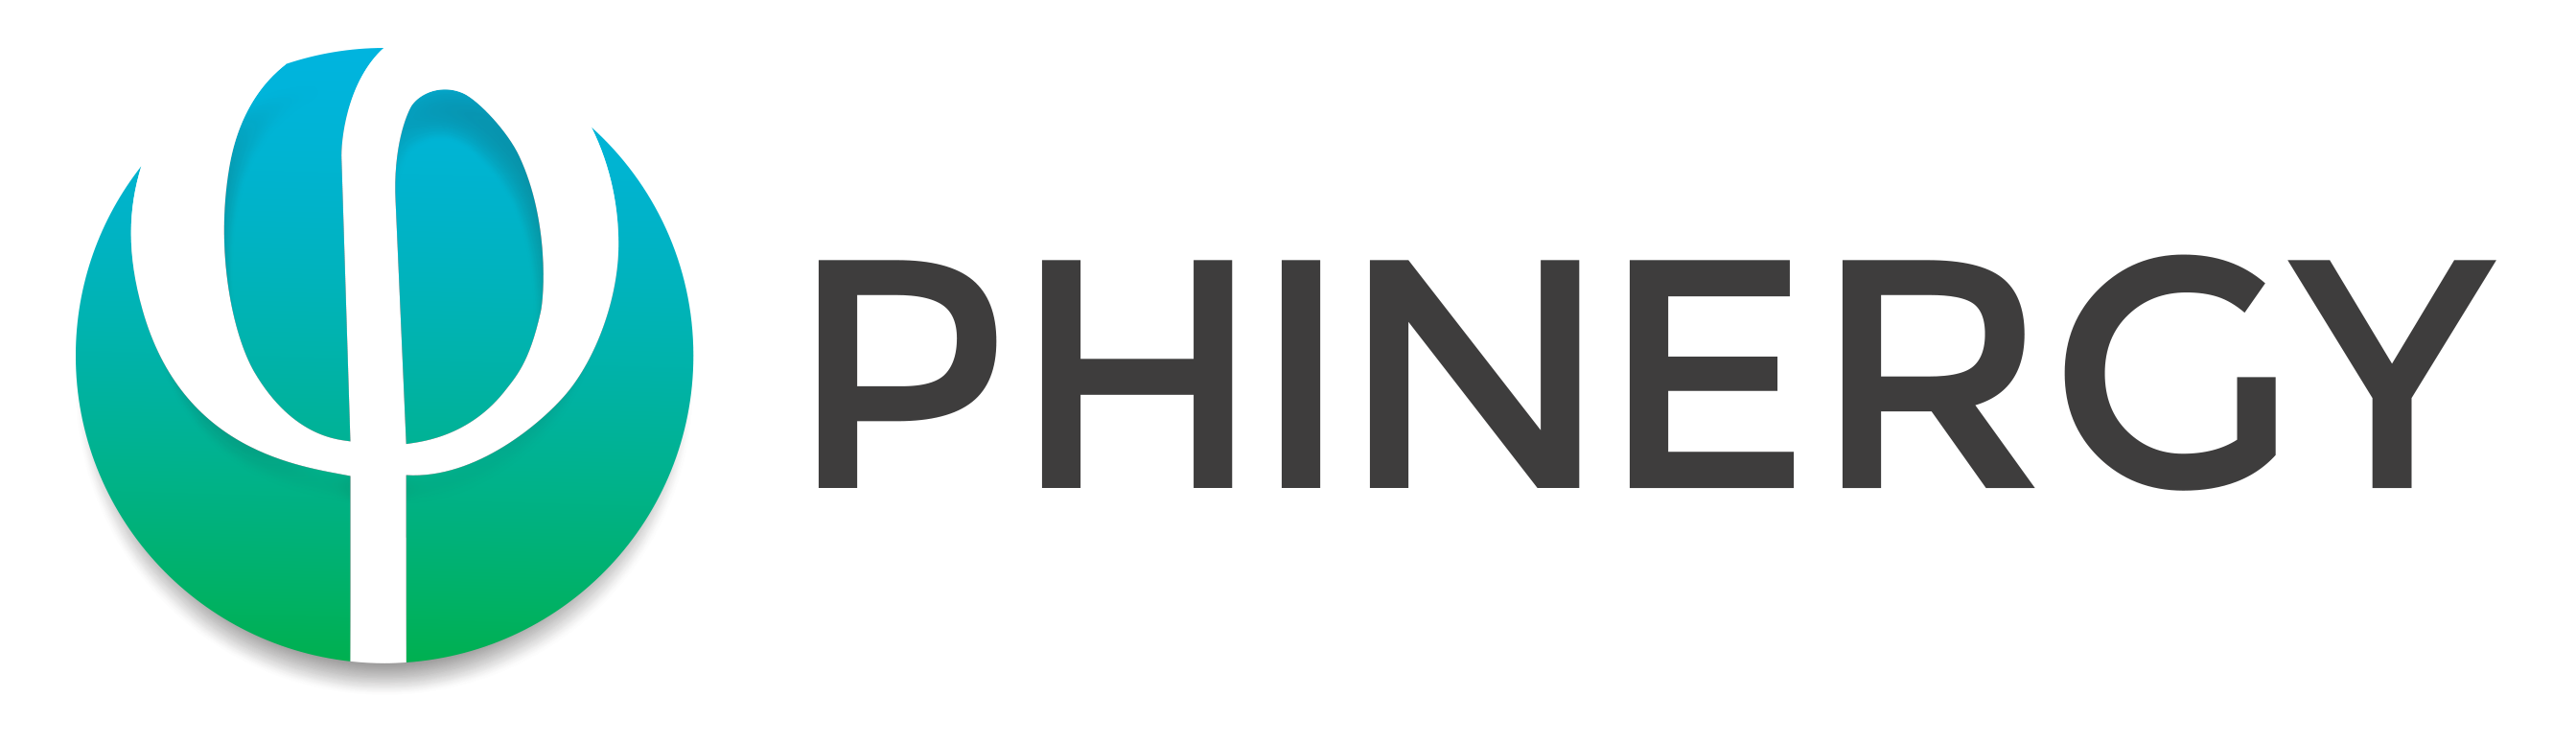 Phinergy_logo transparent